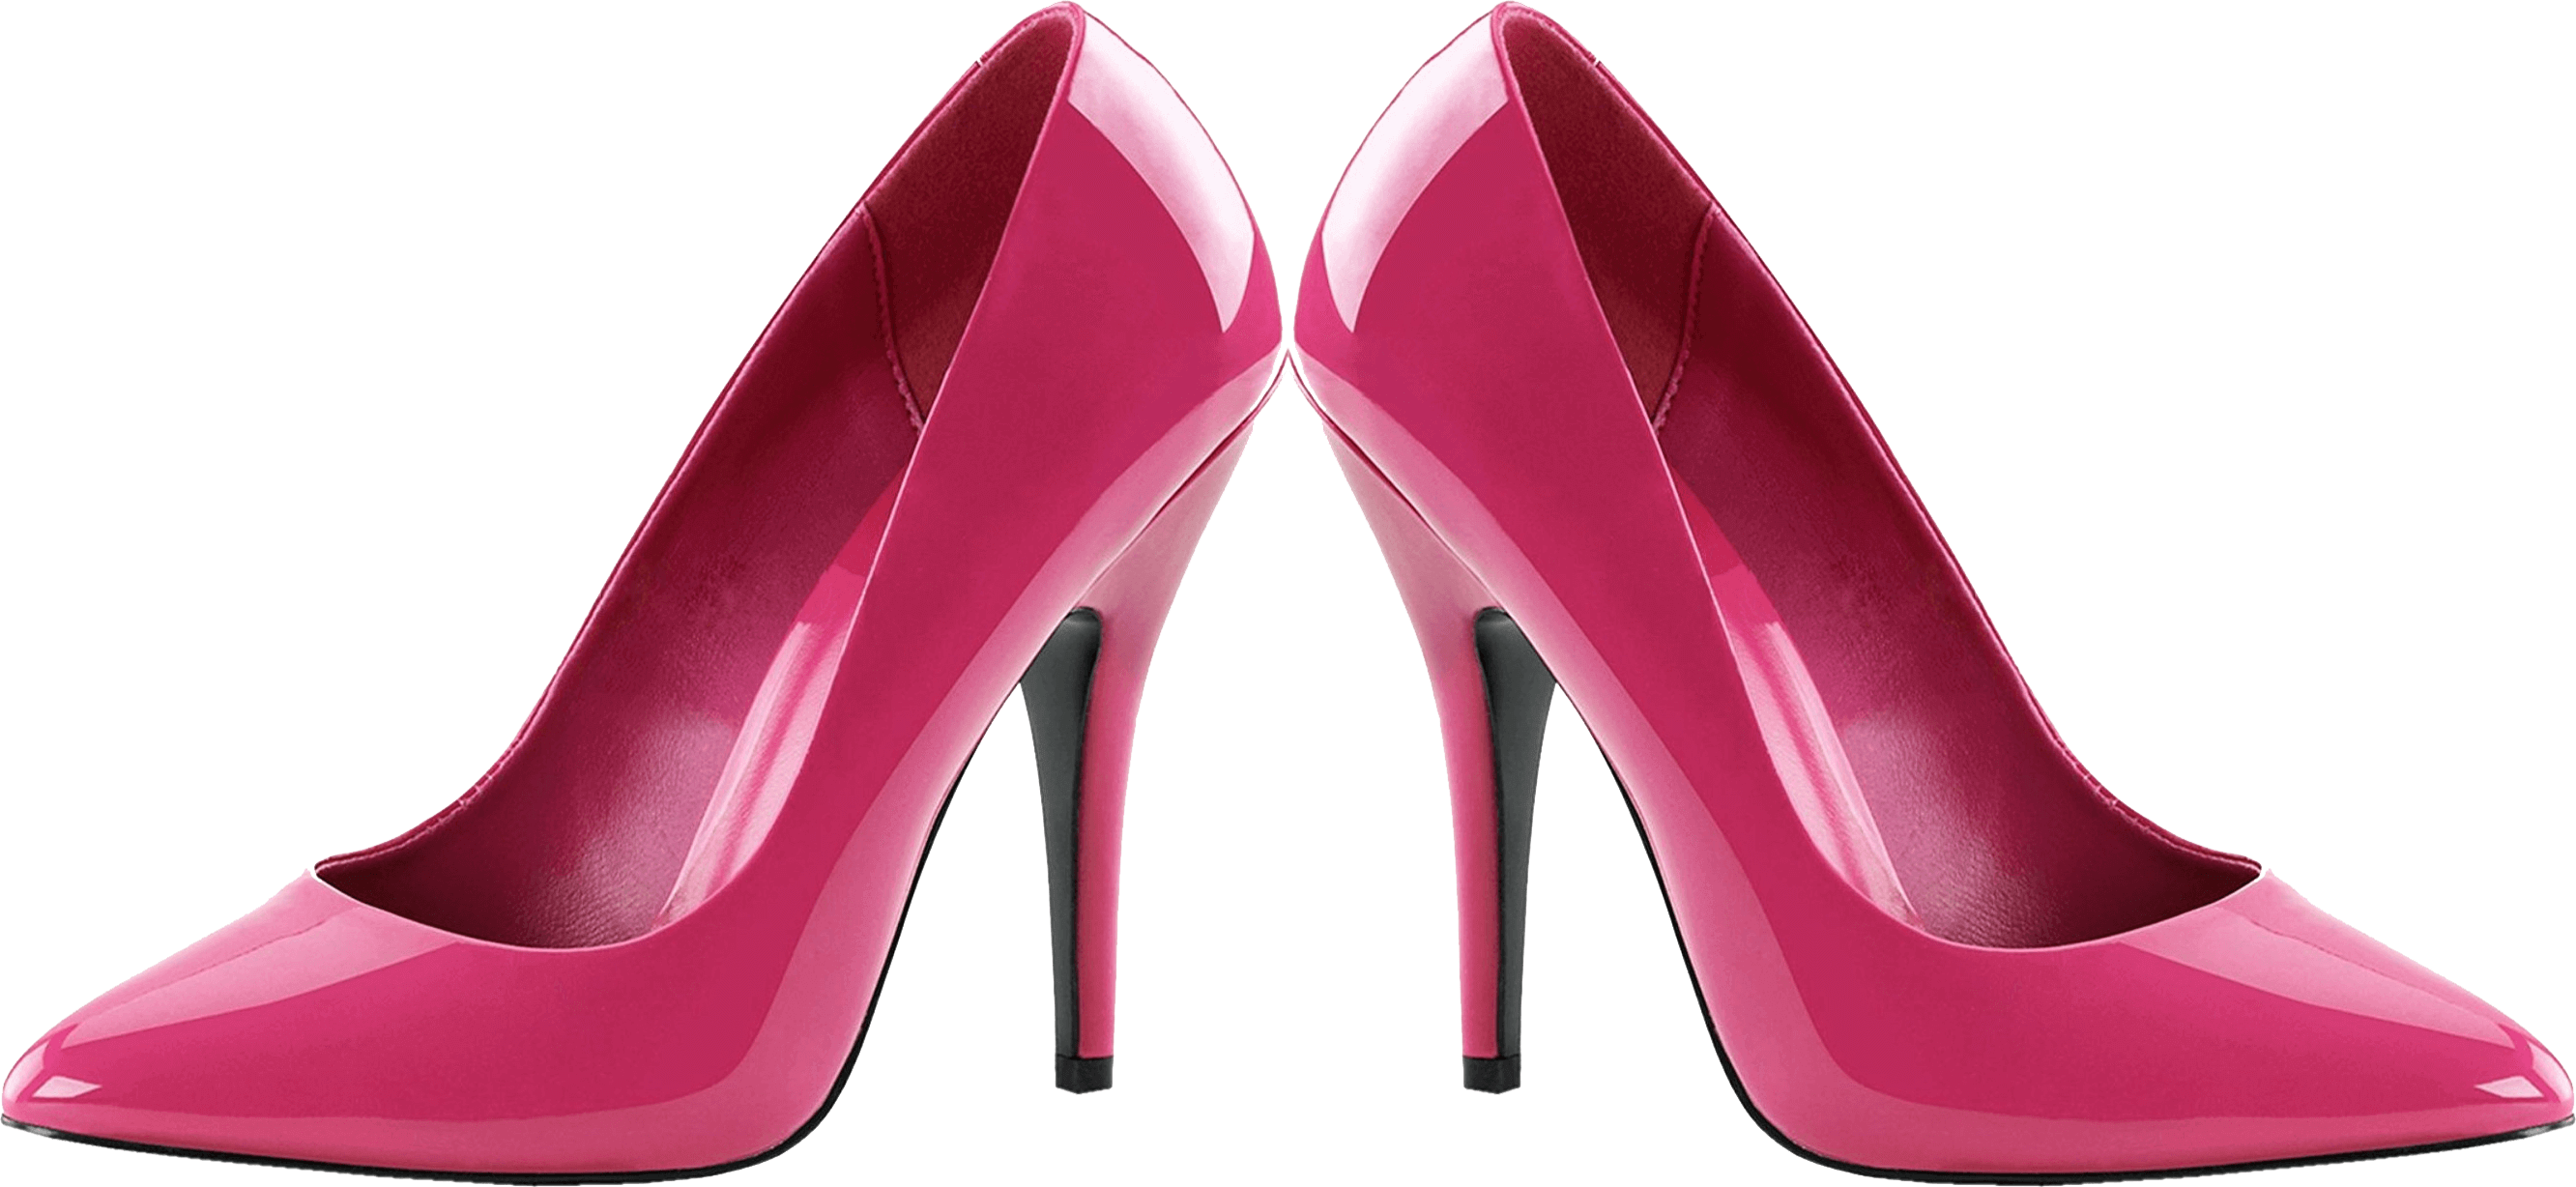 Barrona Women's Pink Dress Sandals | Aldo Shoes